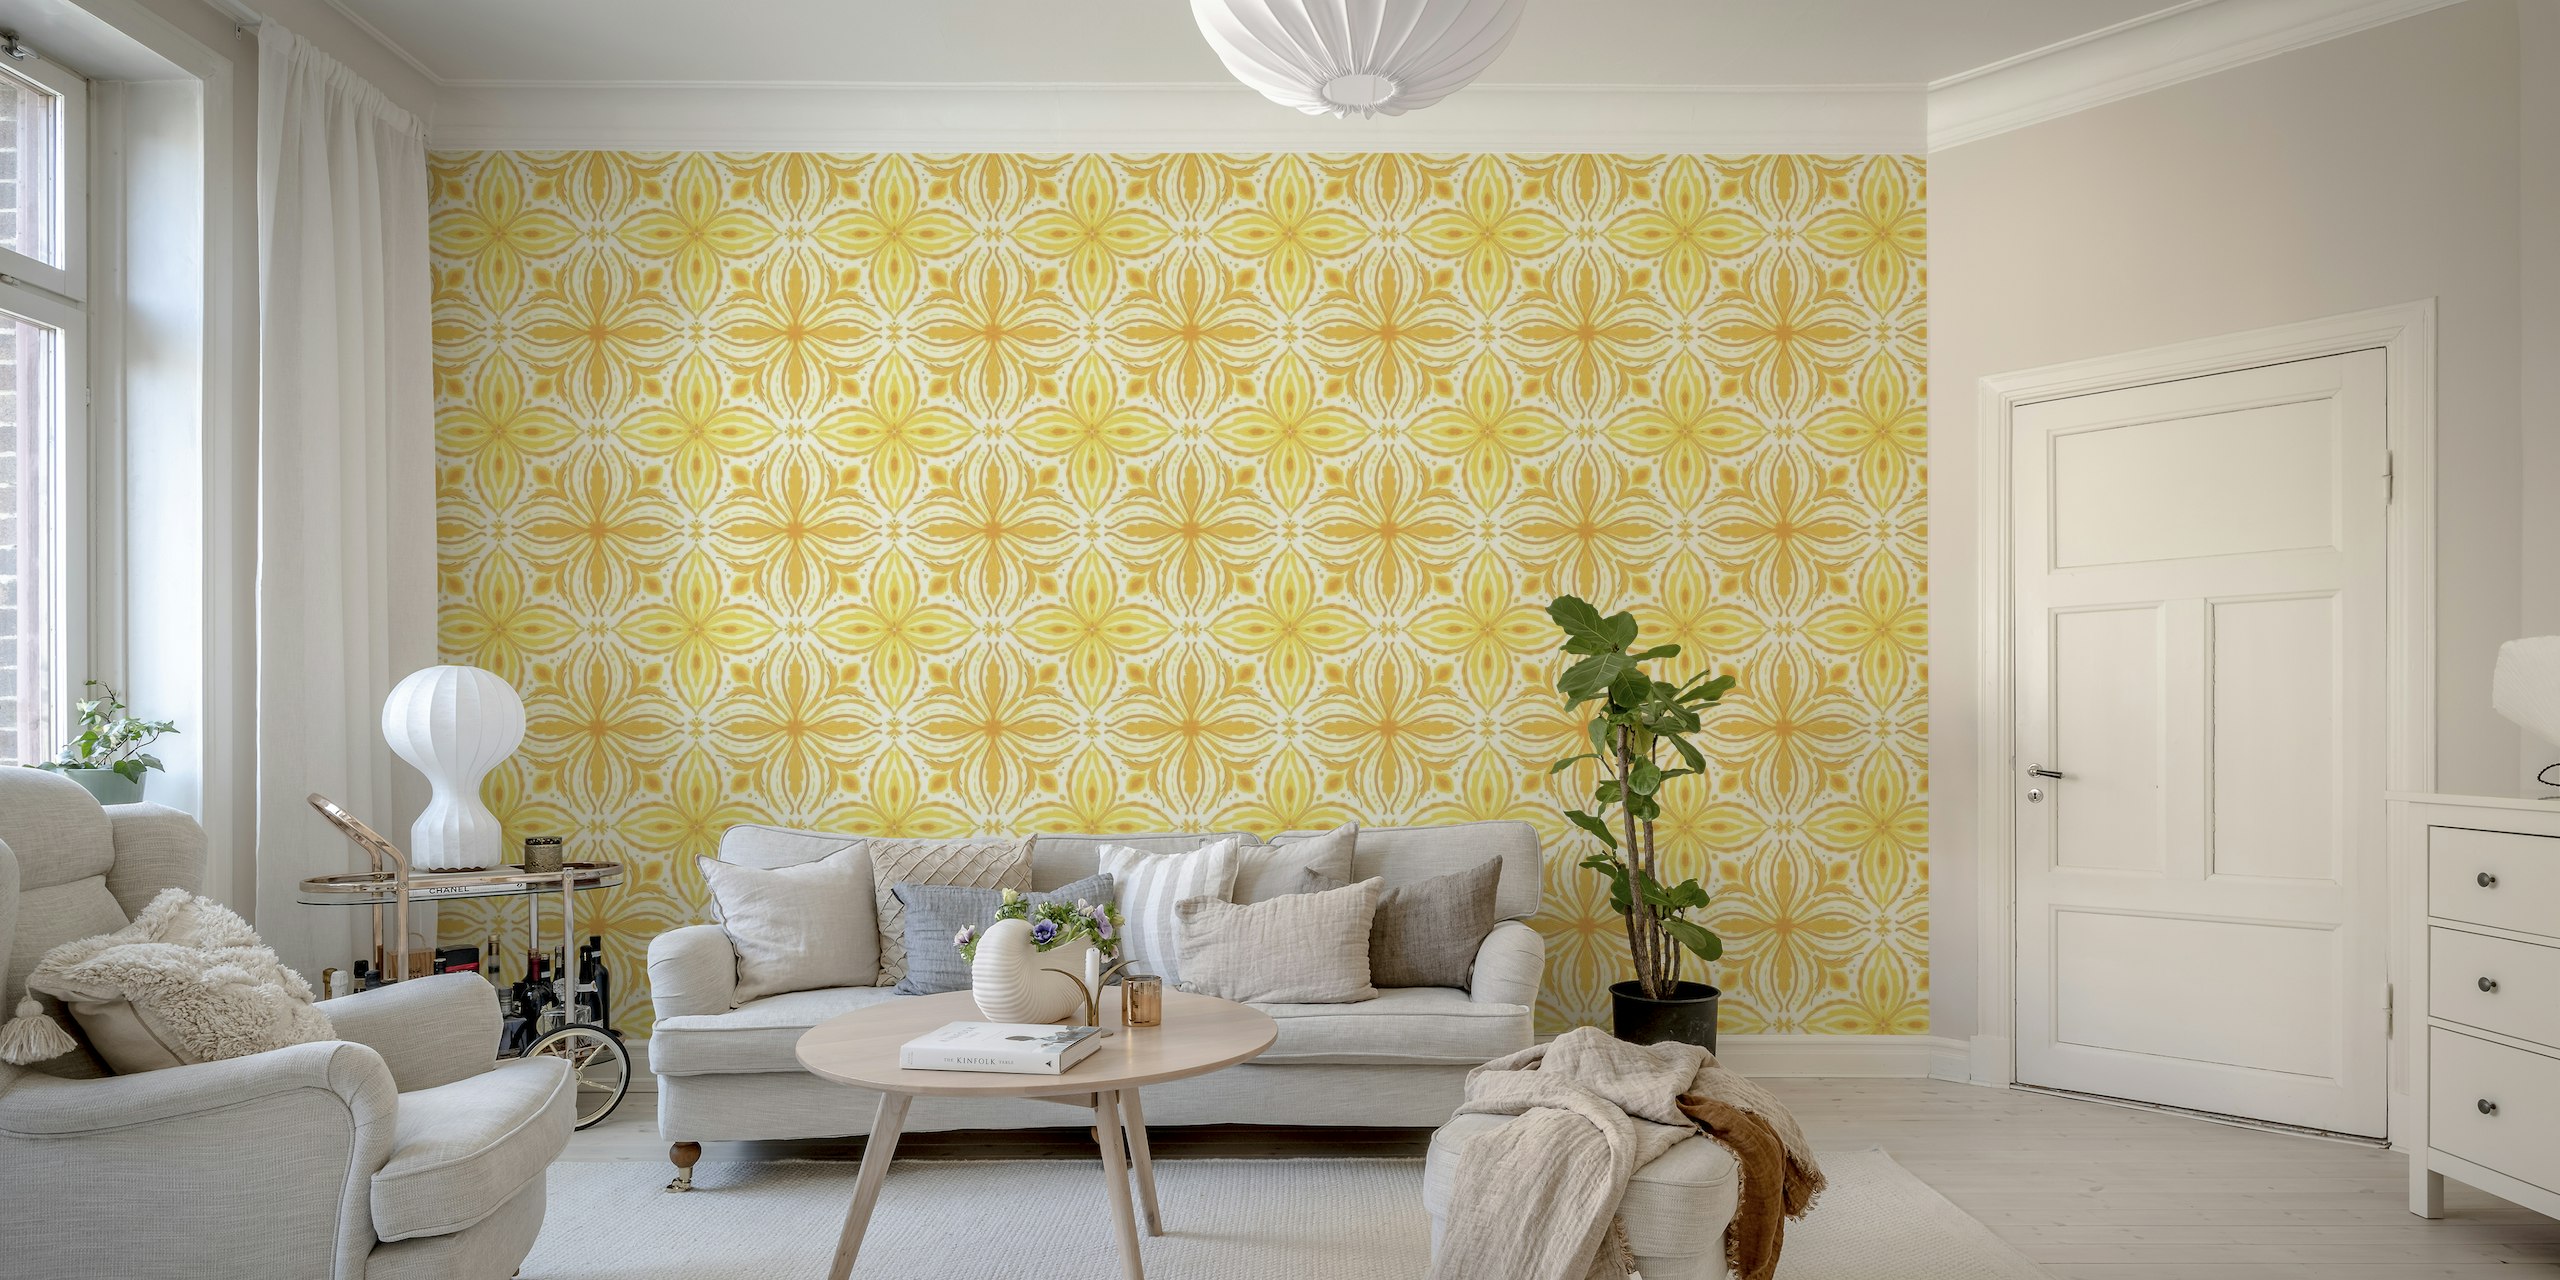 Ornate tiles, yellow and orange 9 papiers peint